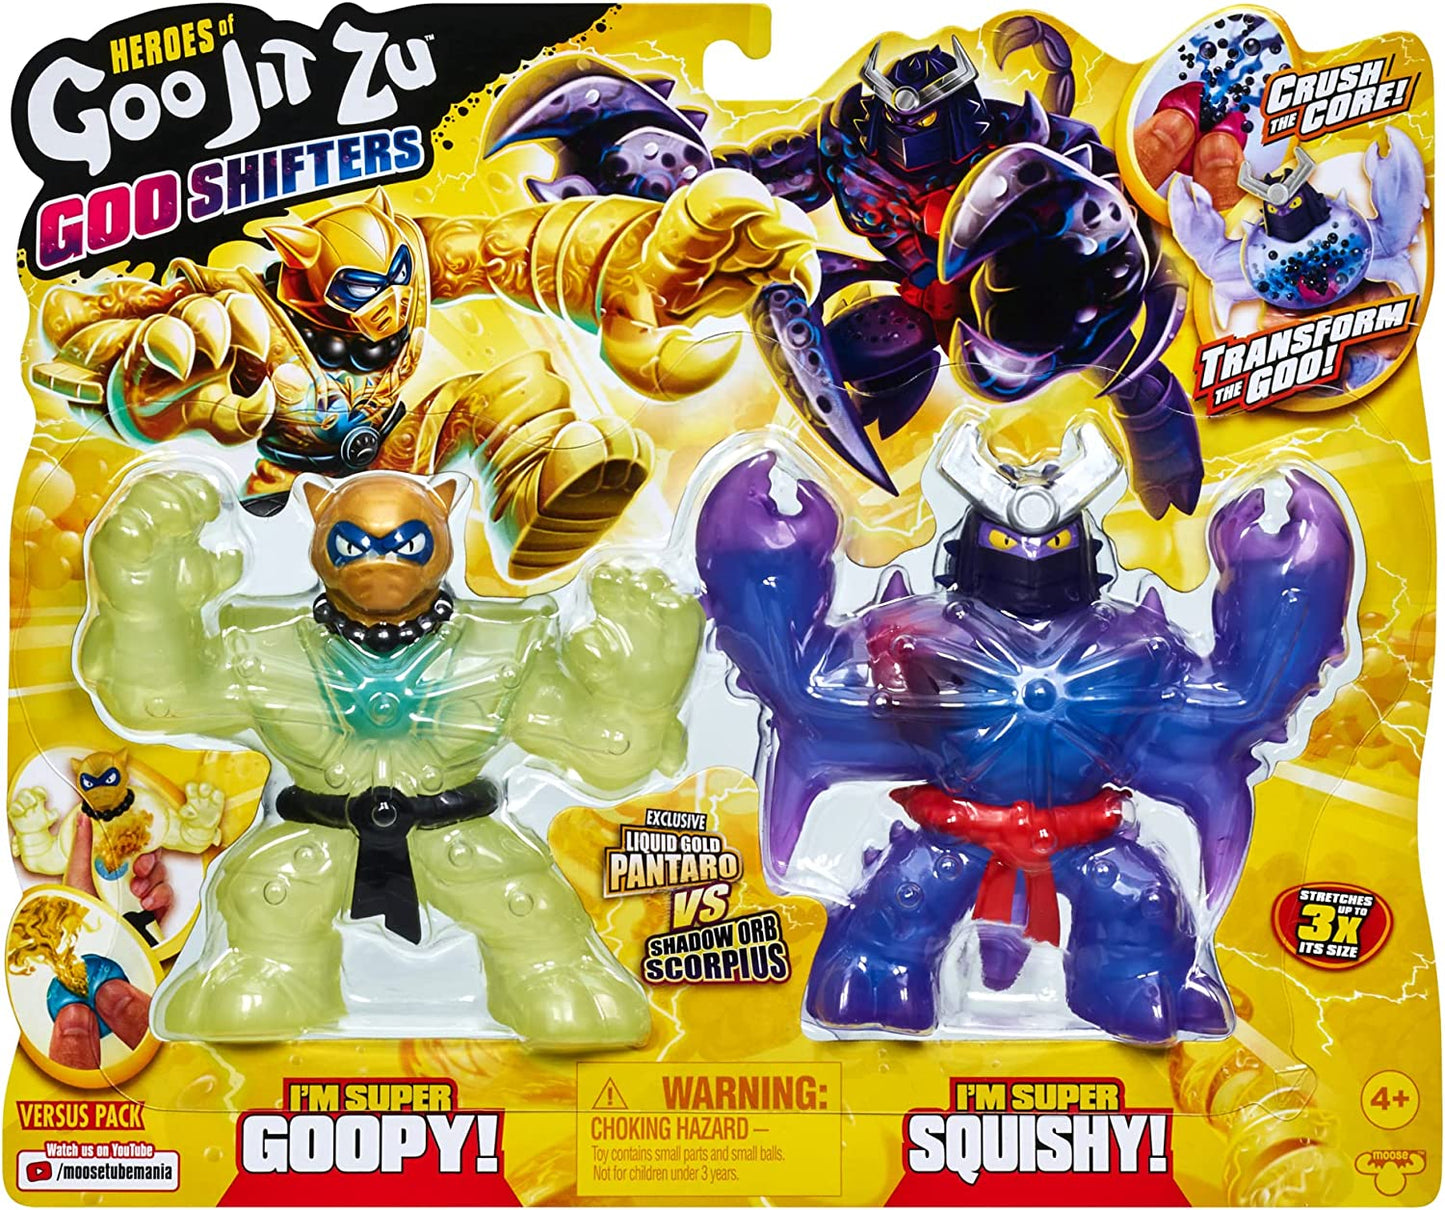 Heroes of Goo Jit Zu Goo Shifters Liquid Gold Pantaro VS Shadow Orb Scorpius Versus Pack, Two Stretchy, Multicolor